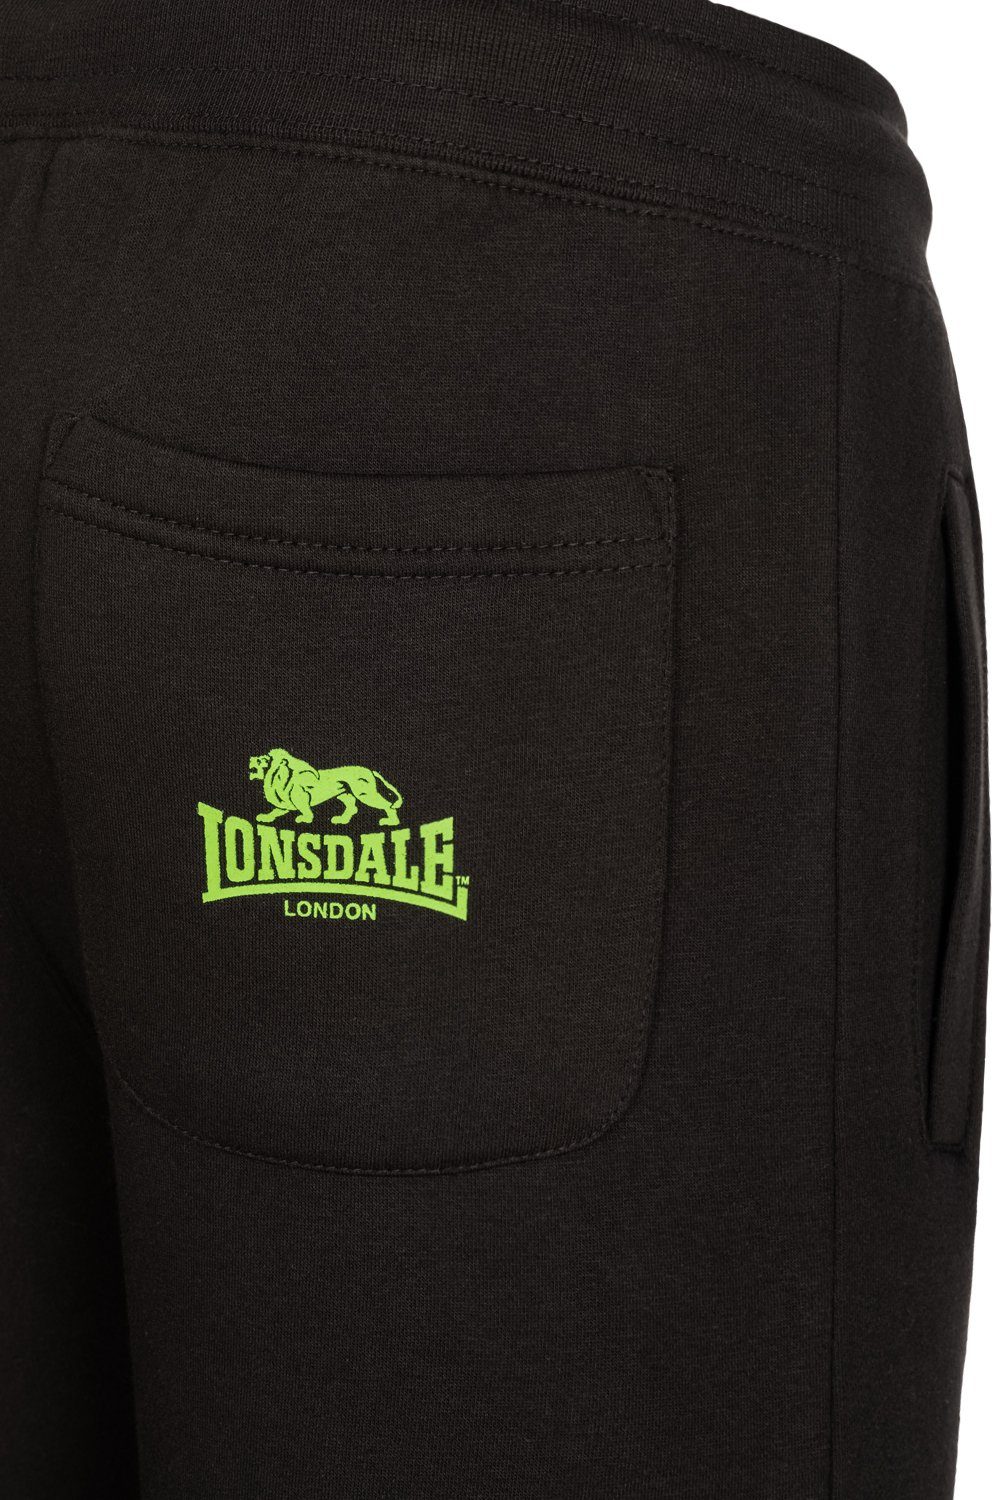 Lonsdale Jogginghose Black/Neon Green WELLINGHAM